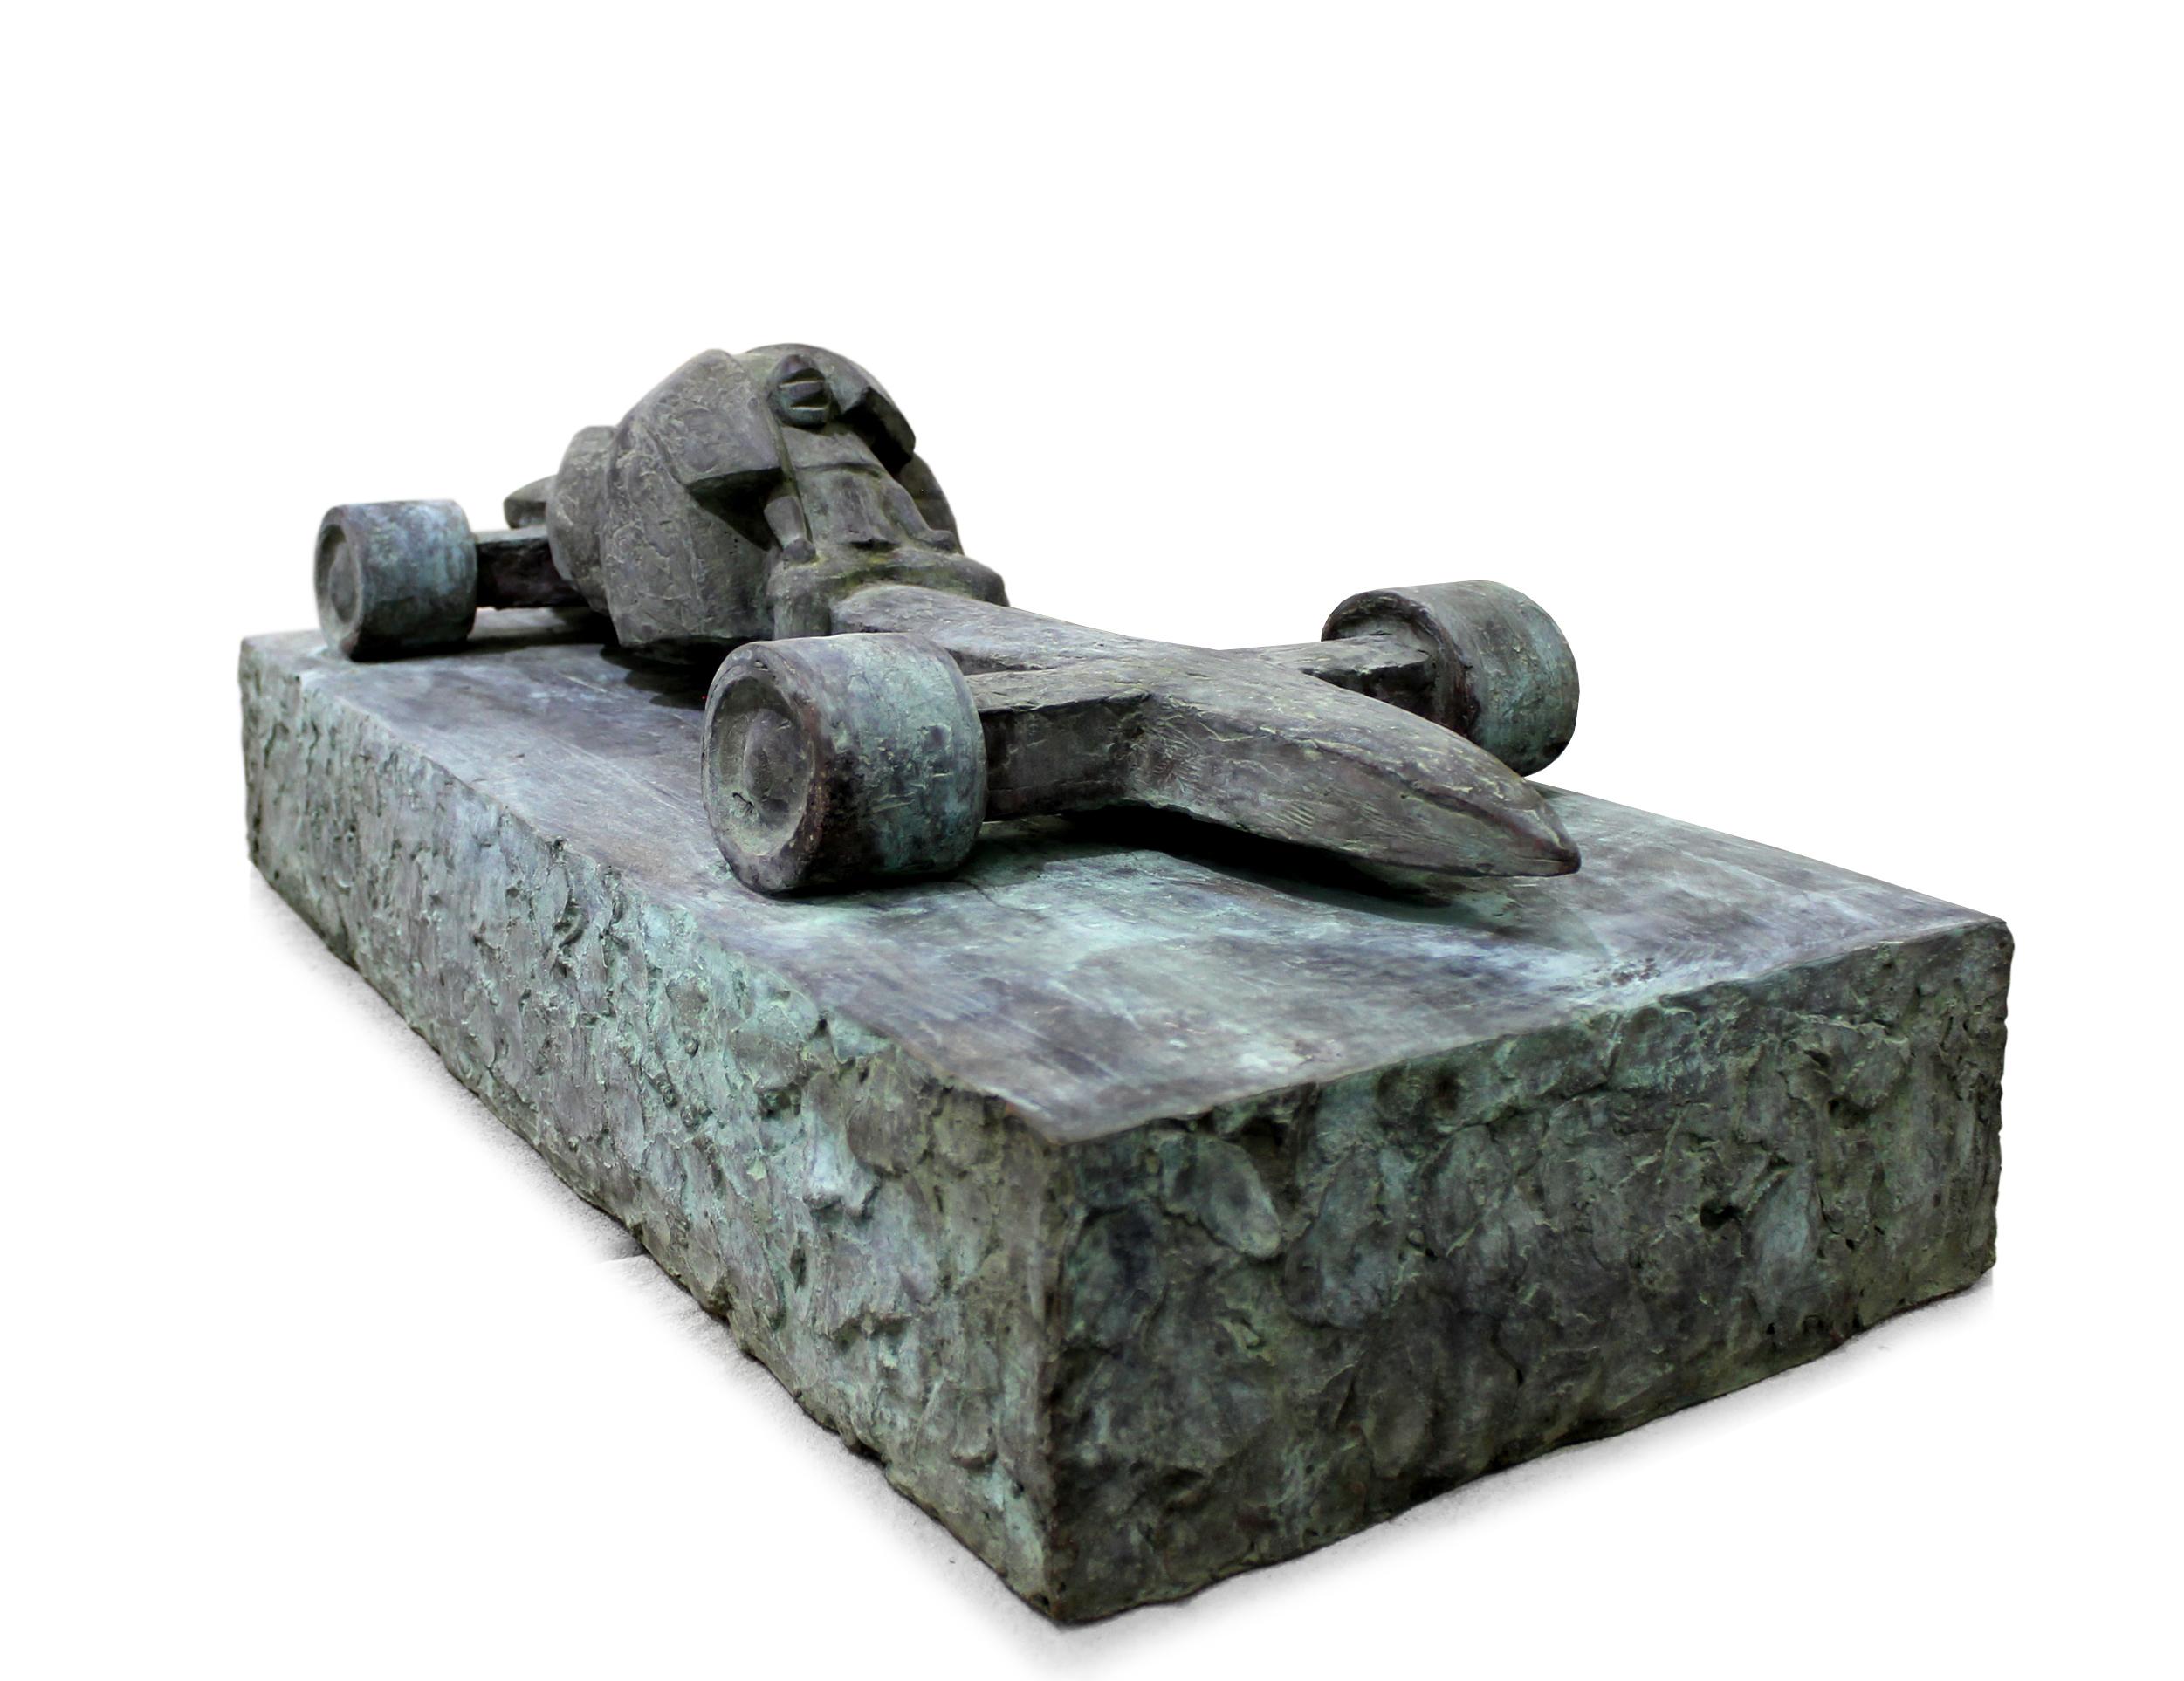  Racer of Silver Dream - Bronze Sculpture 2